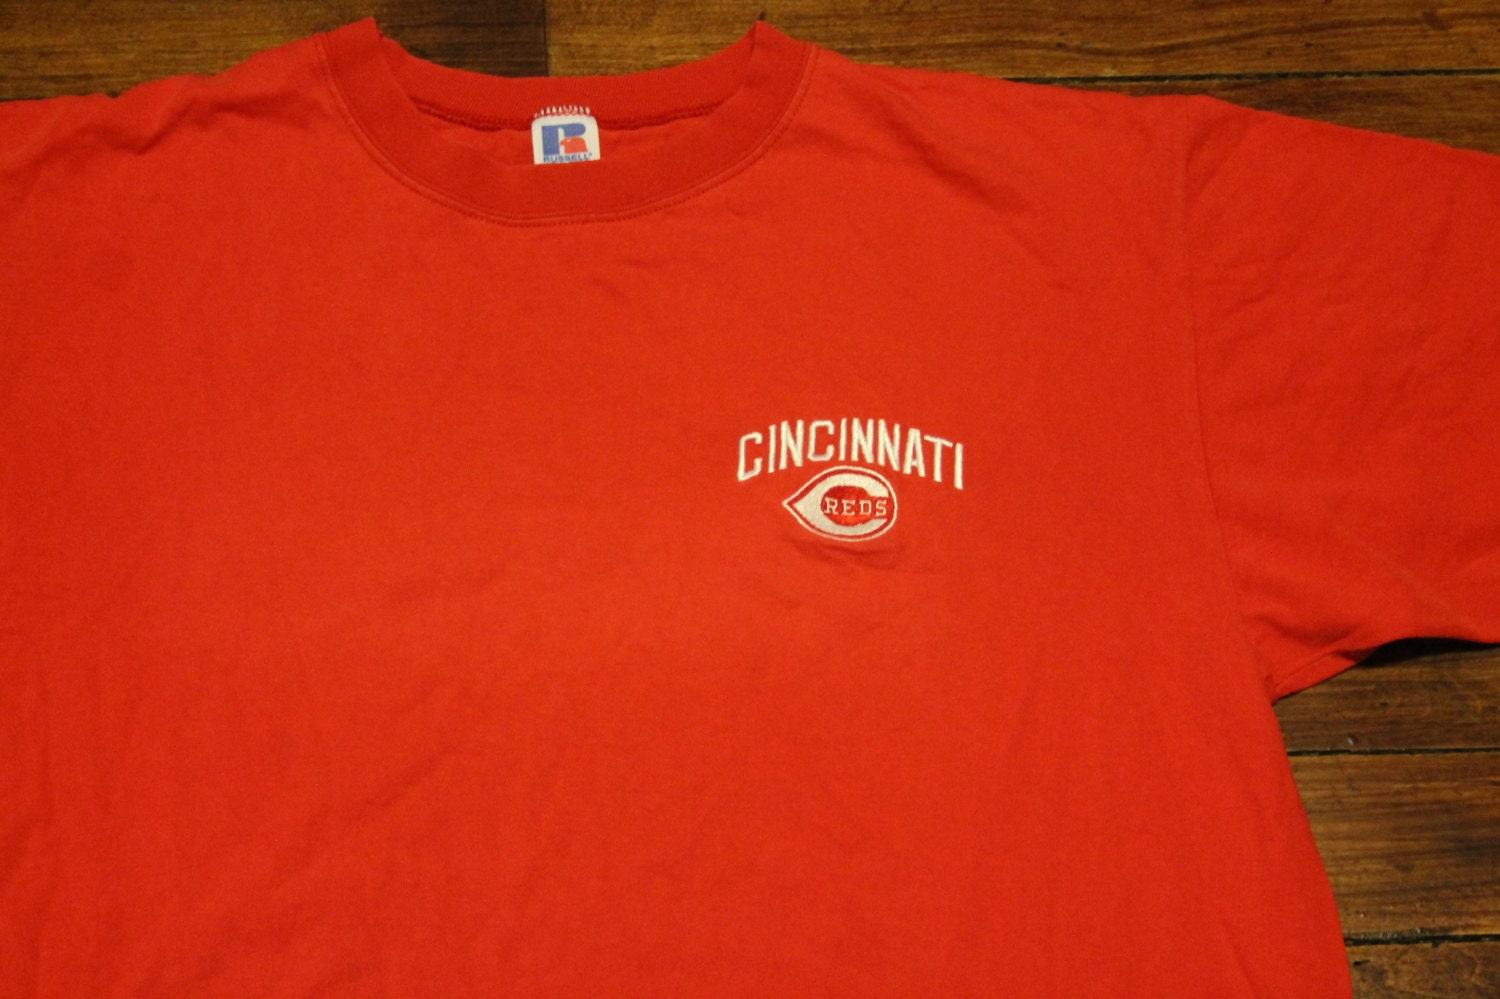 Cincinnati Reds Shirt Plain Red Tshirt With Stitched Emblem - Etsy